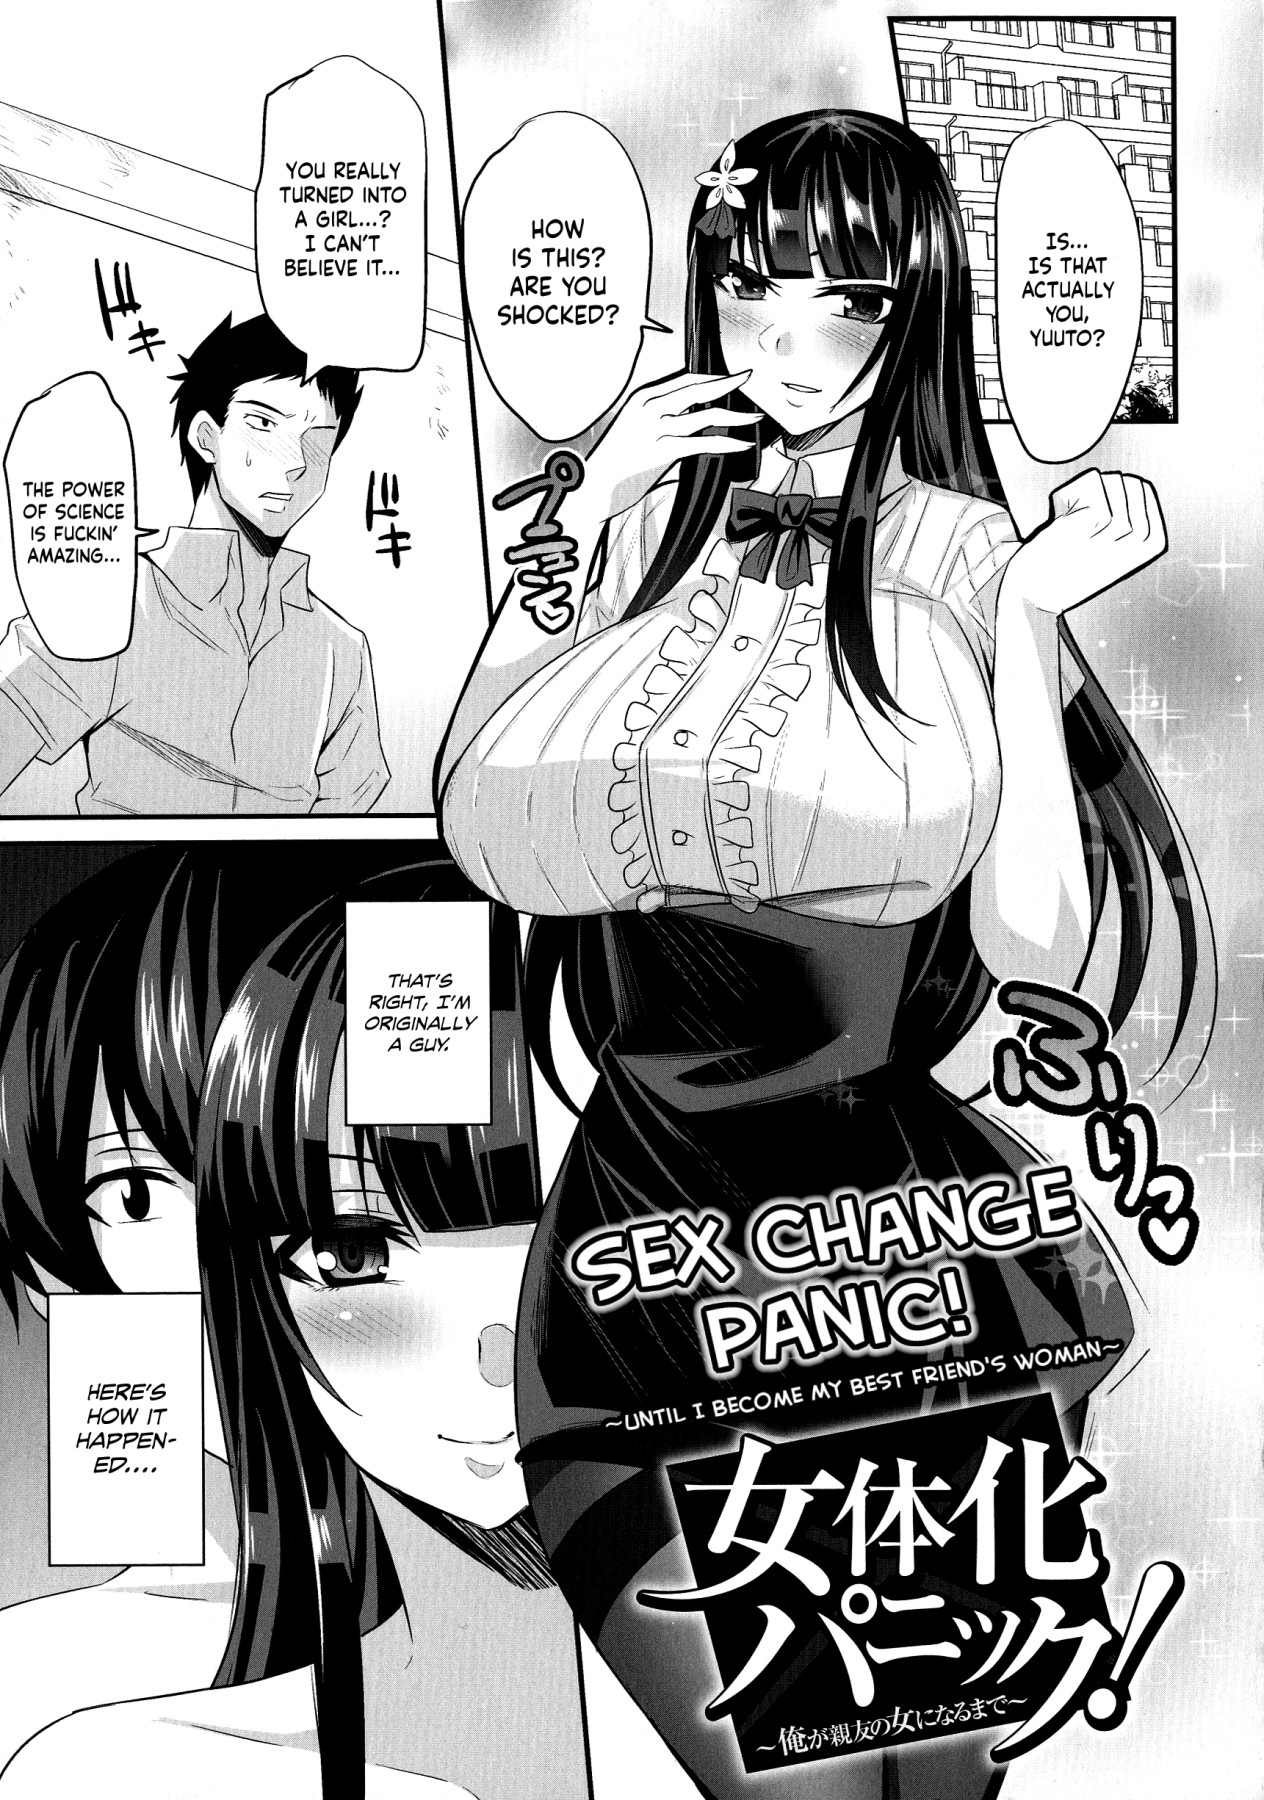 Hentai Manga Comic-Sex Change Panic! ~Until I Become My Best Friend's Woman~-Read-1